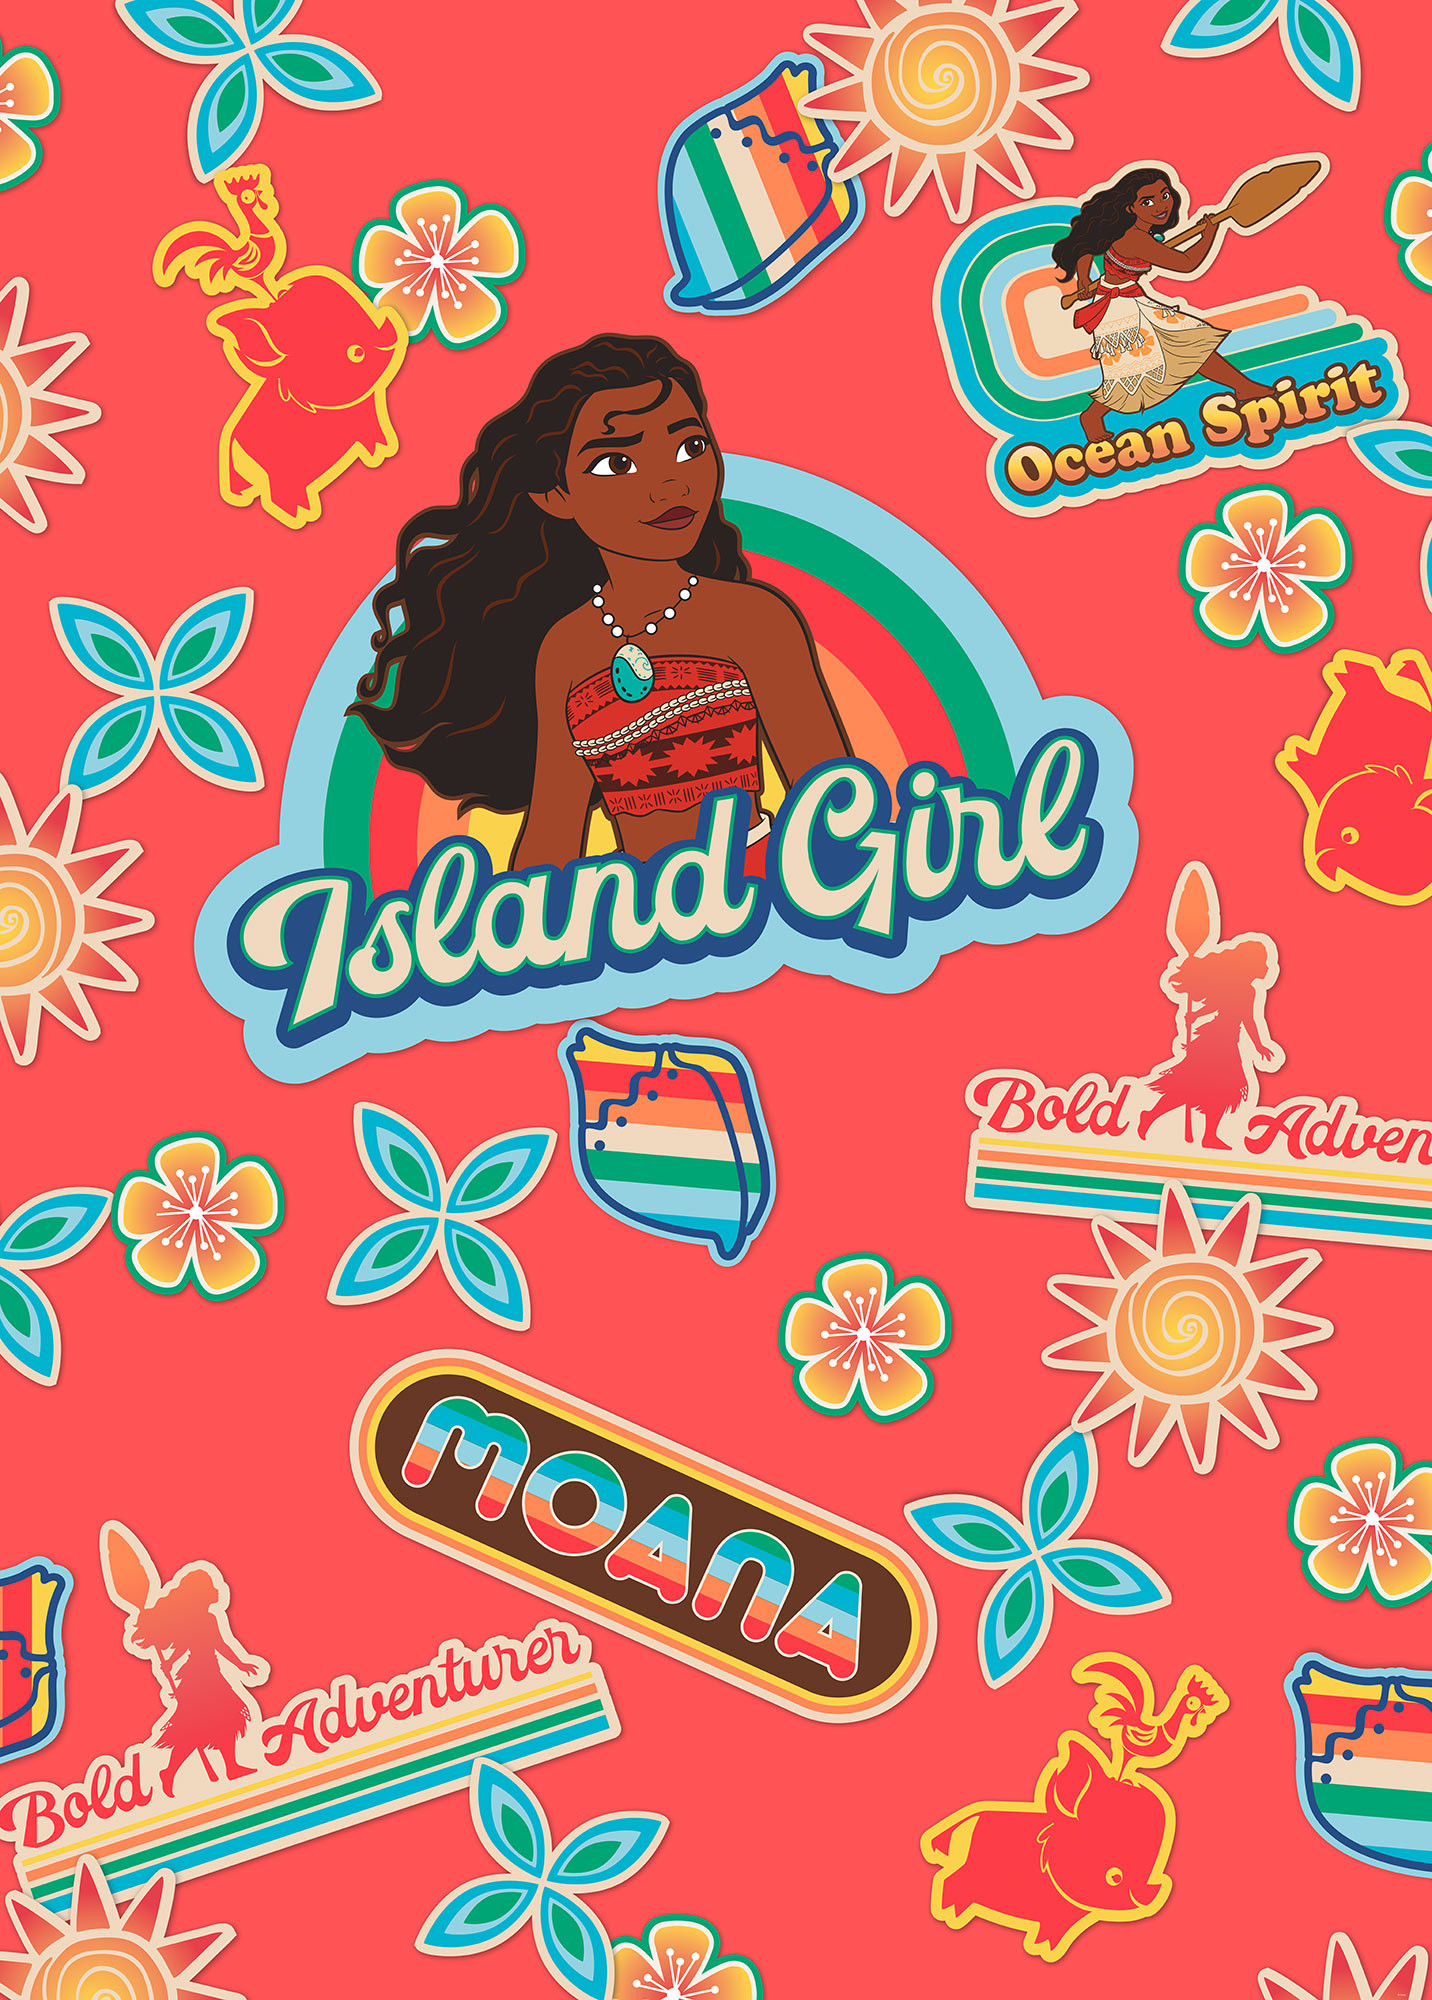 Moana Island Girl